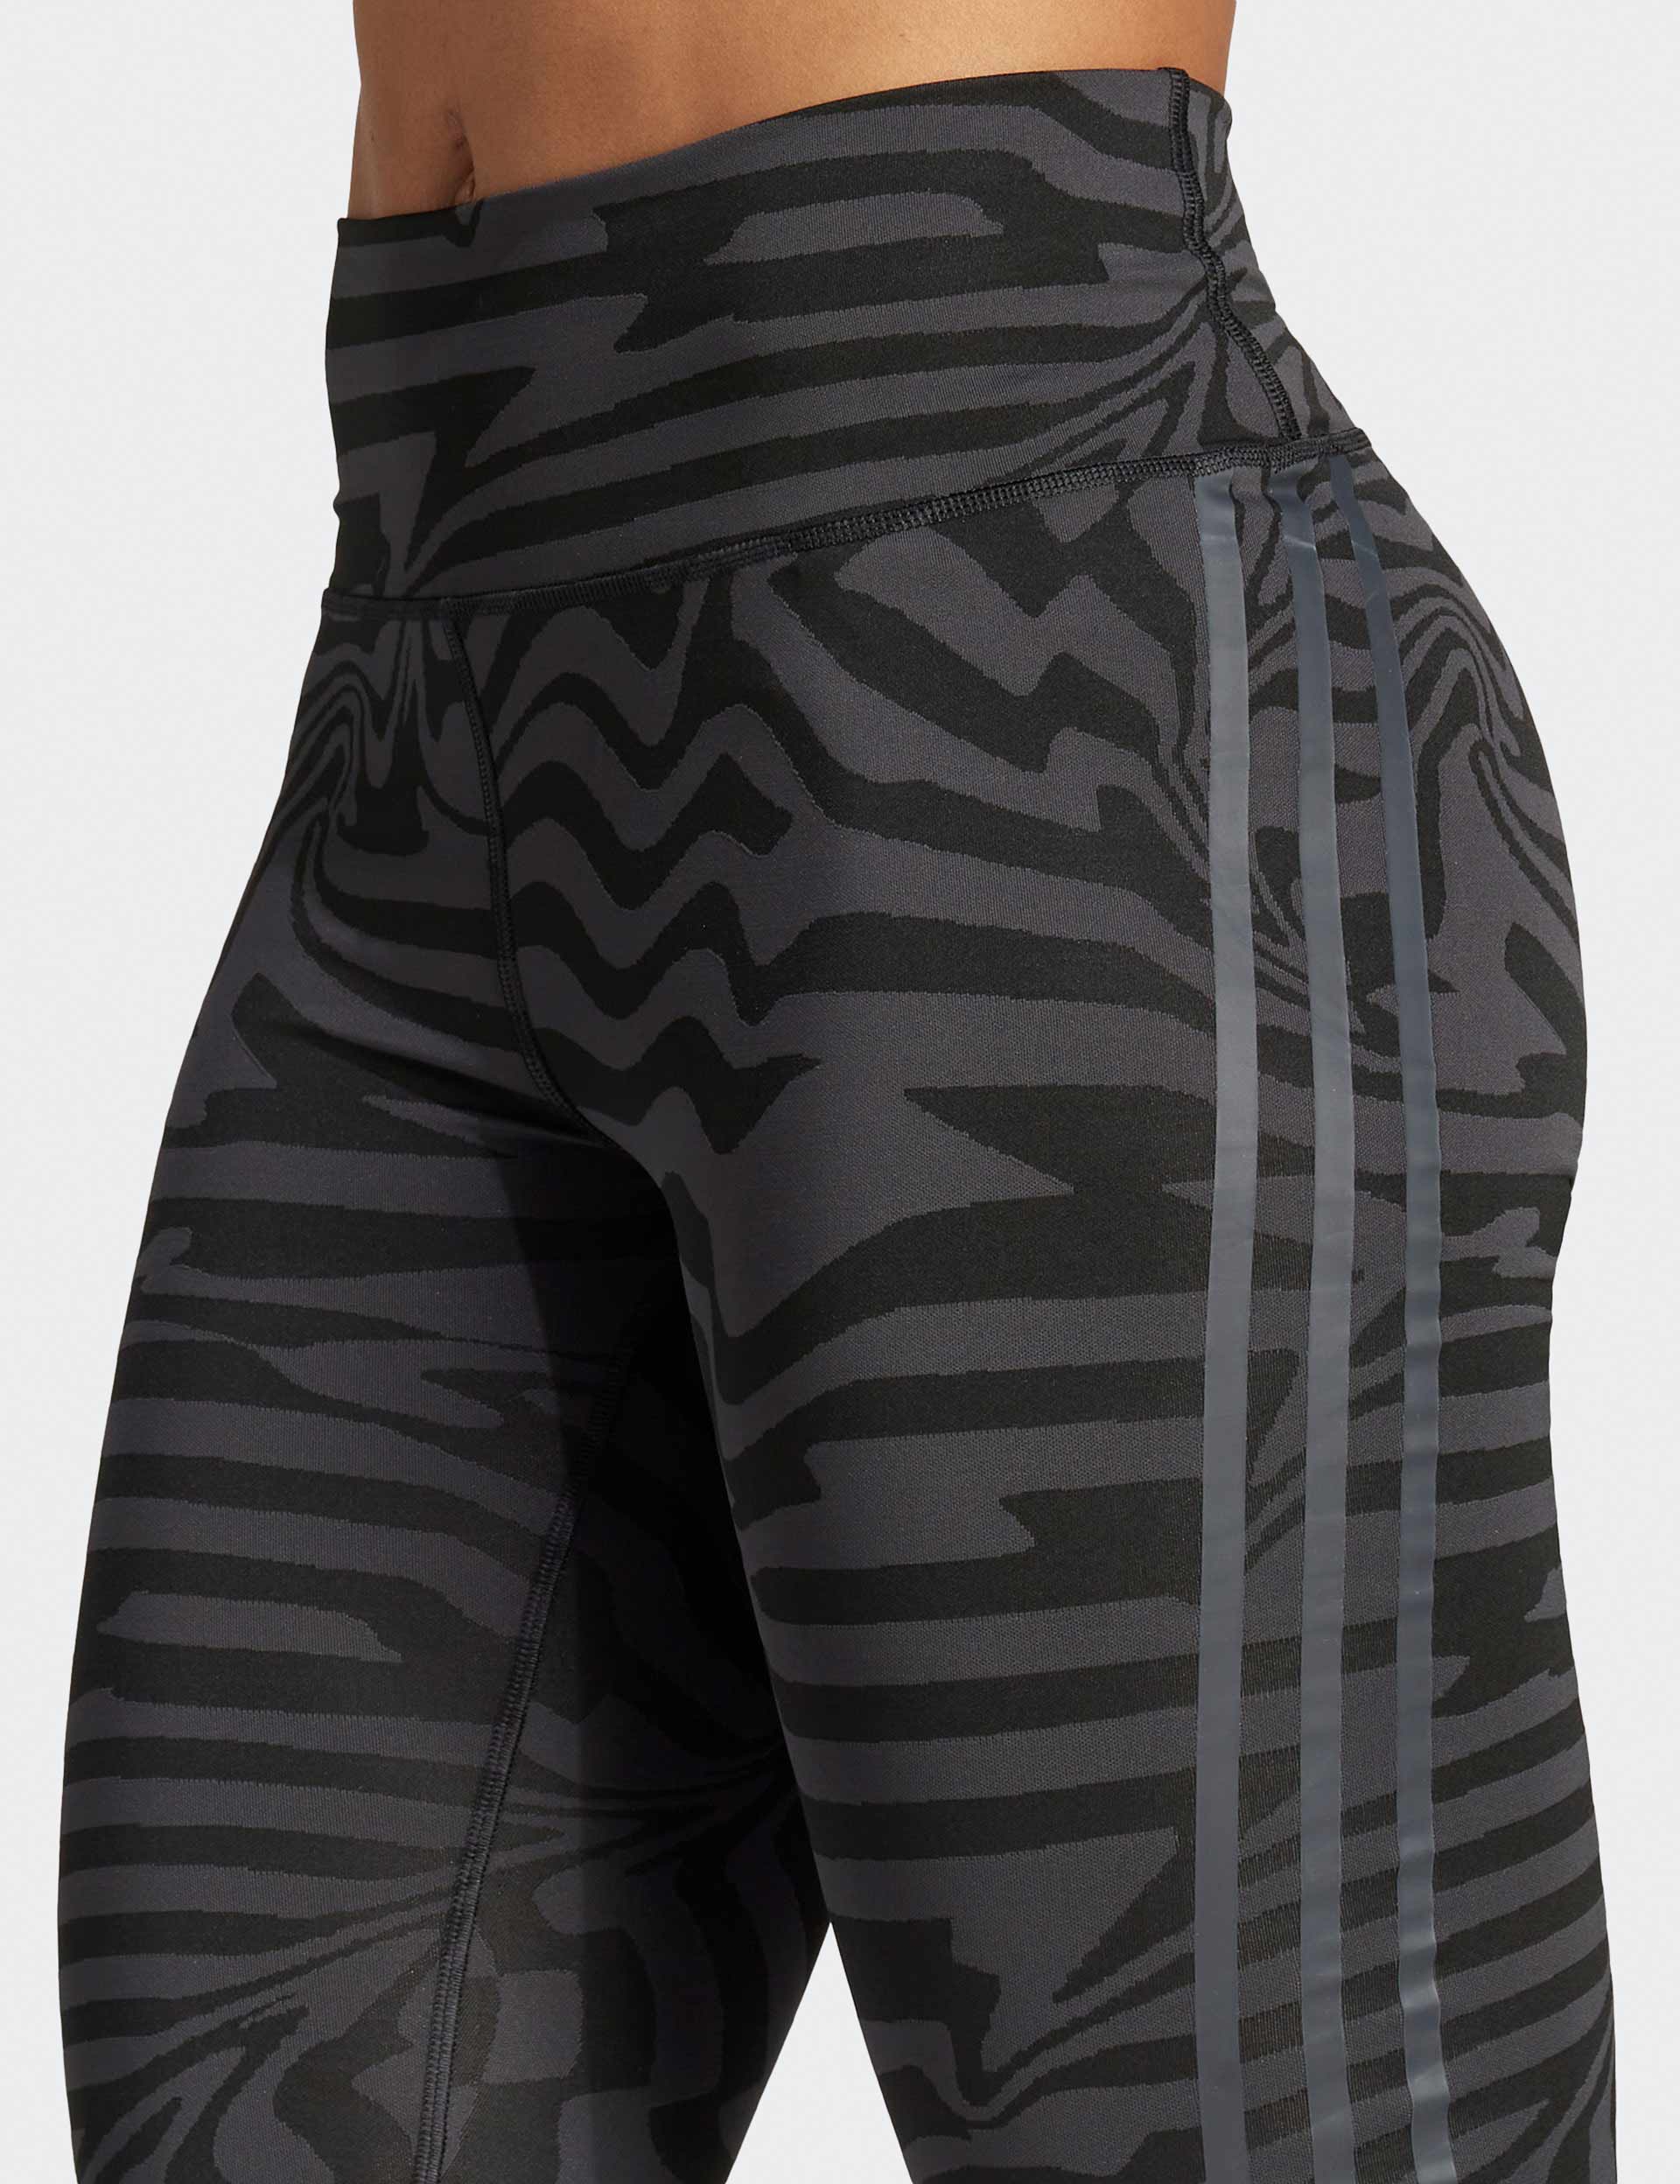 adidas Women's Optime Training Icons 3-Stripes 7/8 Tights, Black